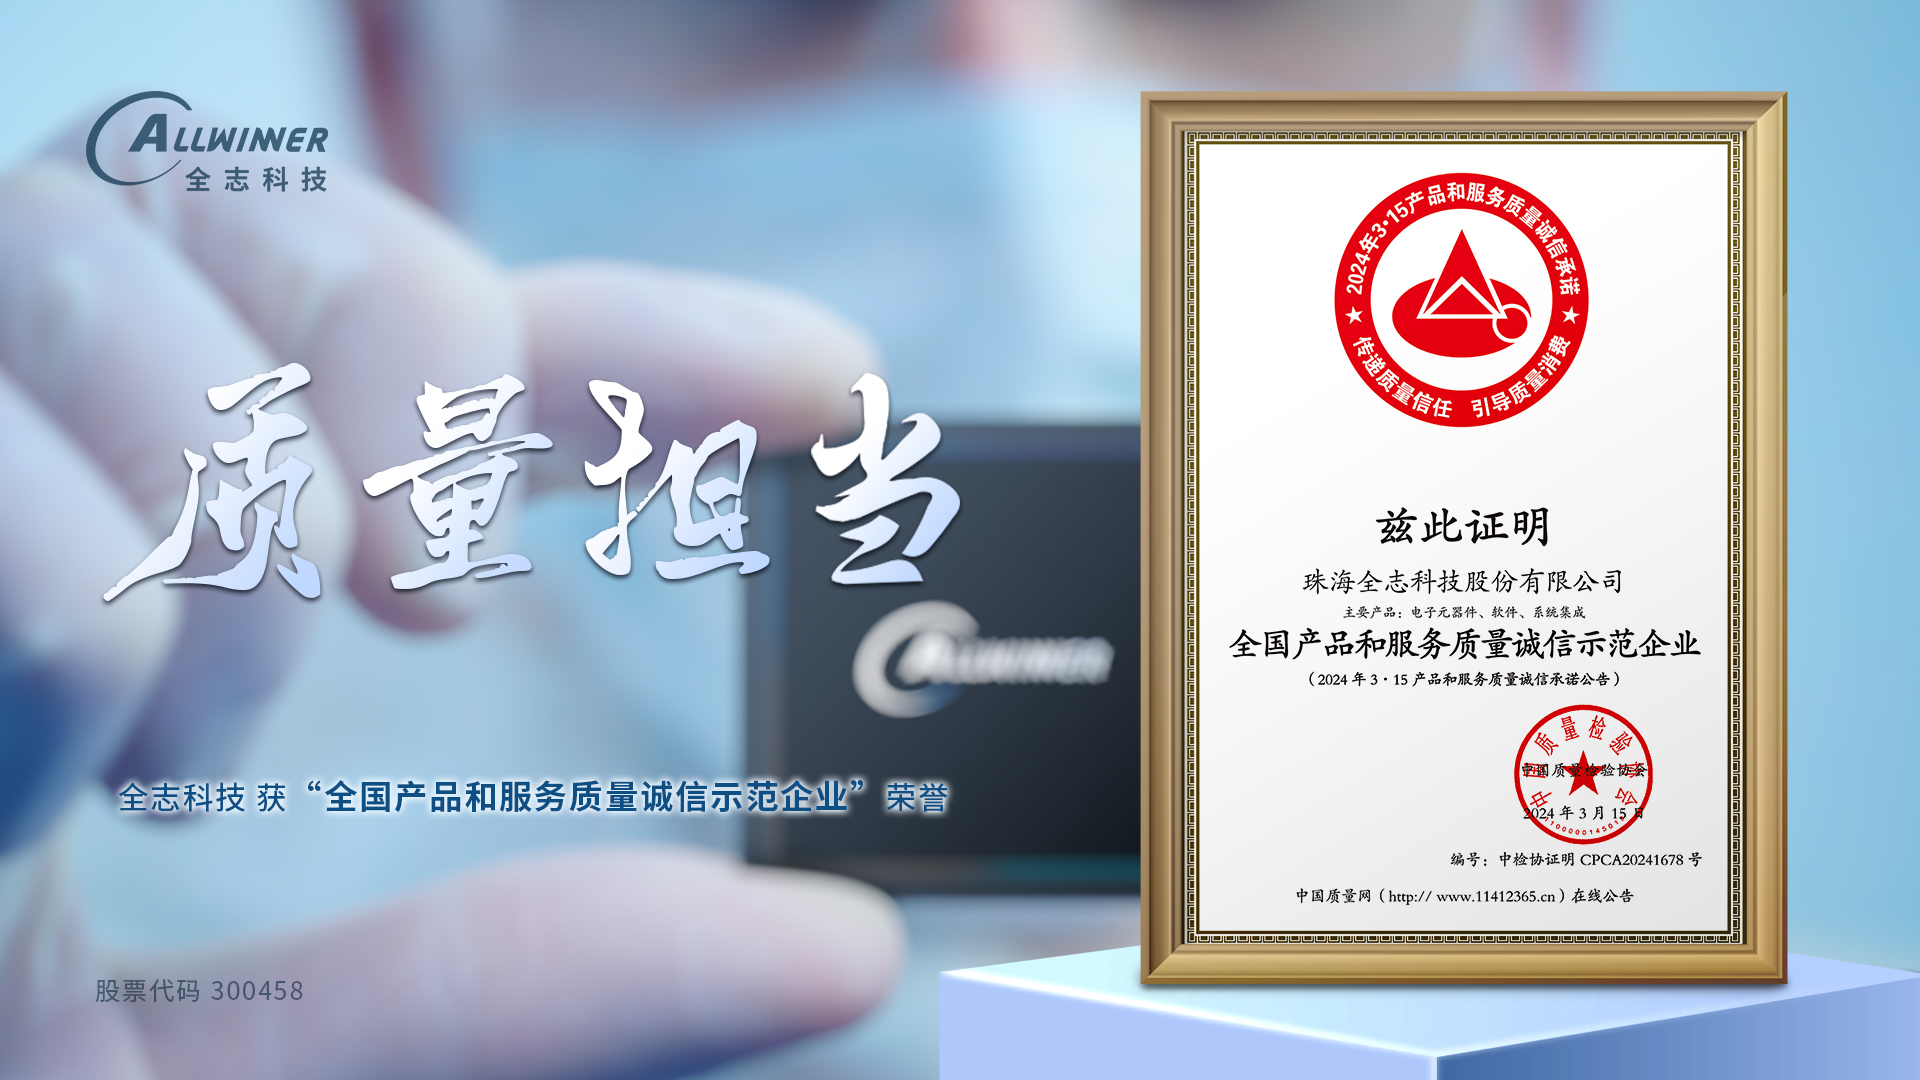 yl23455永利官网 获 全国产品和服务质量诚信示范企业 荣誉